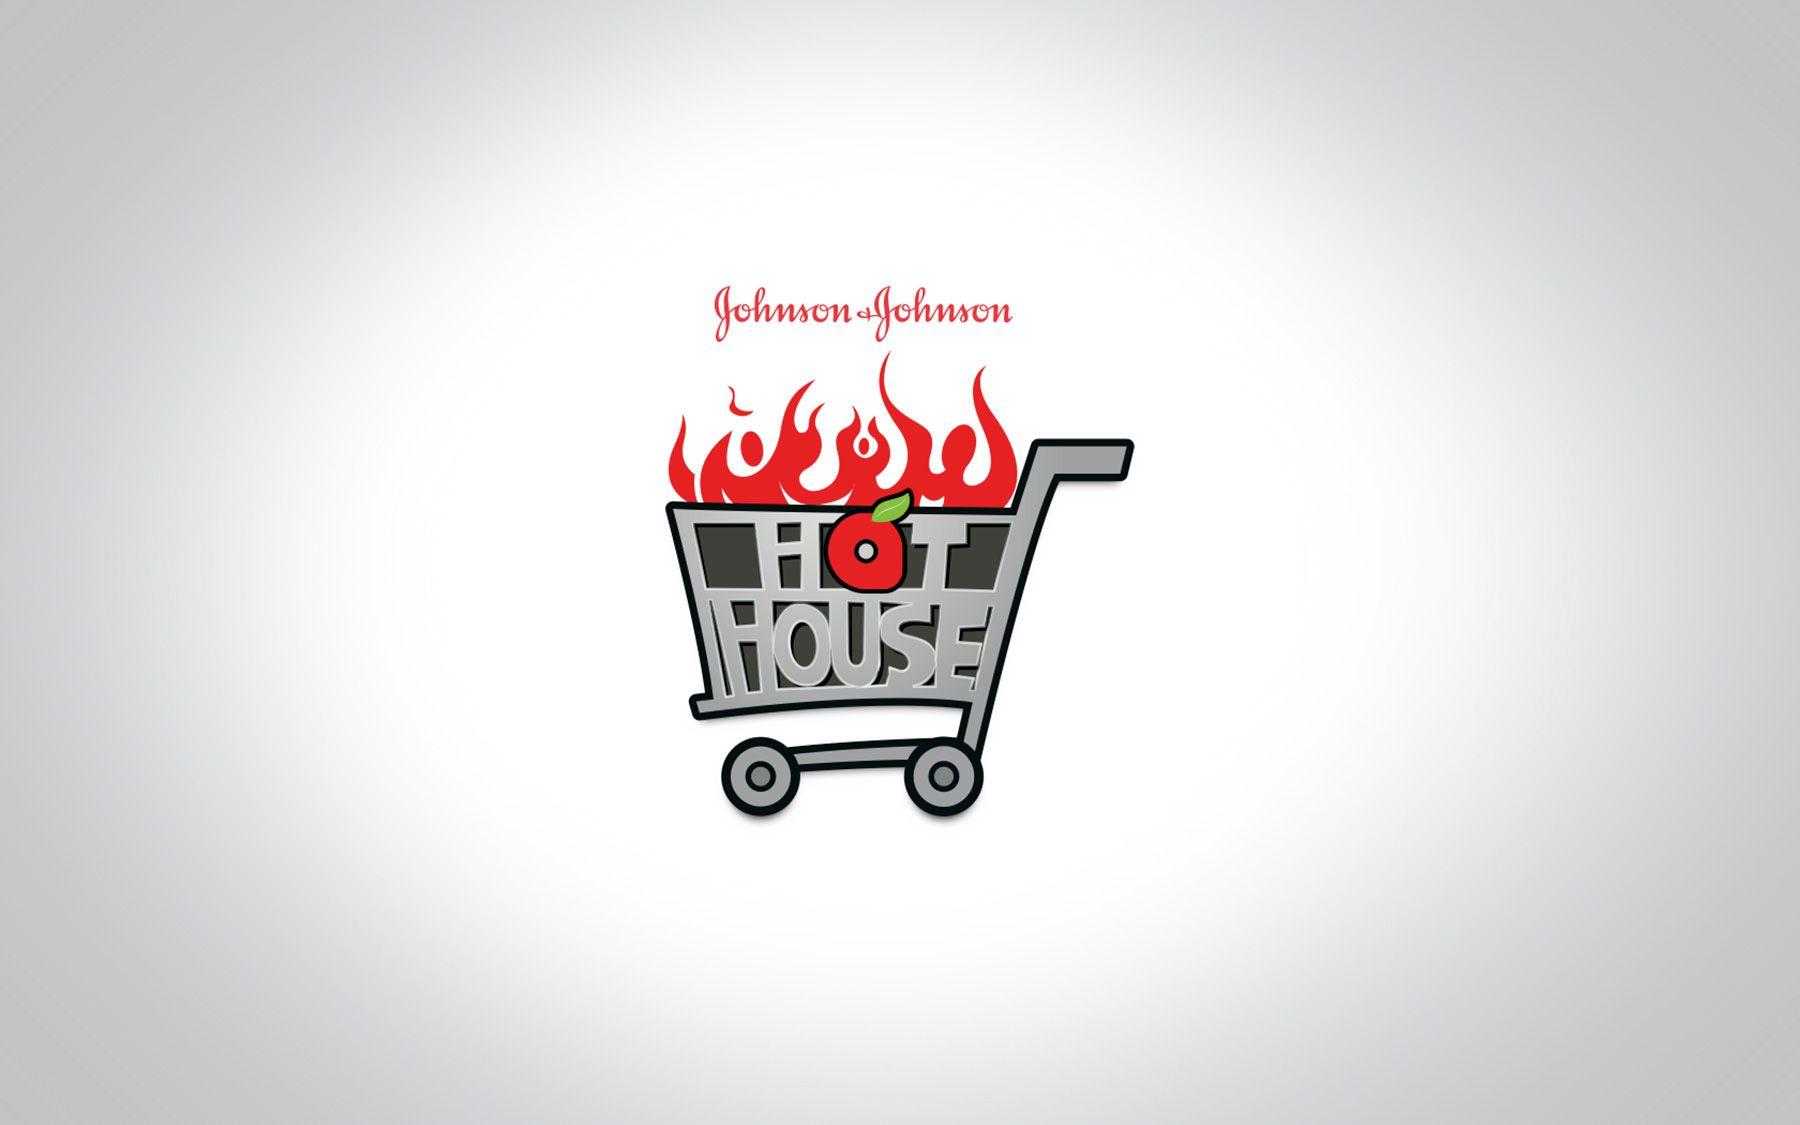 HyperPanda Logo - Johnson & Johnson HotHouse – GLENN ANTAO